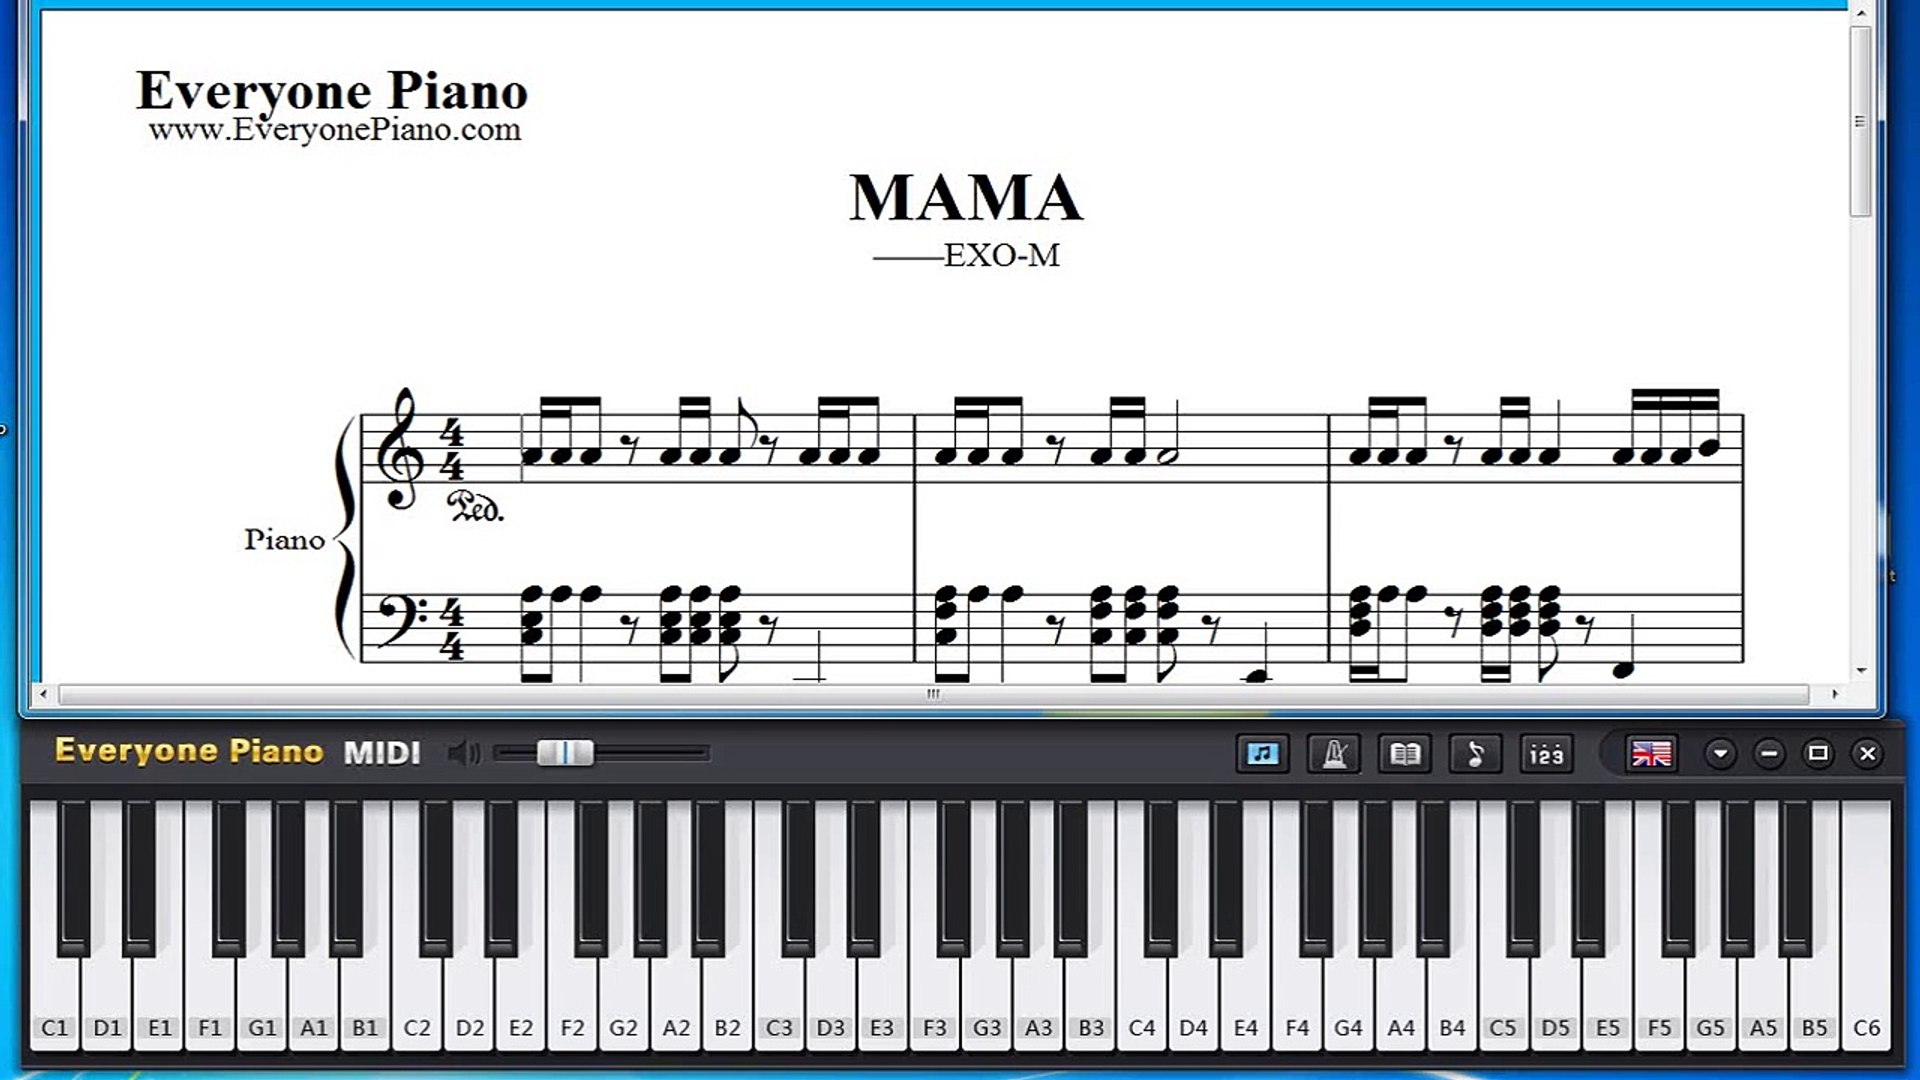 Free MAMA - EXO-M Piano Sheet Music Tutorial - video Dailymotion